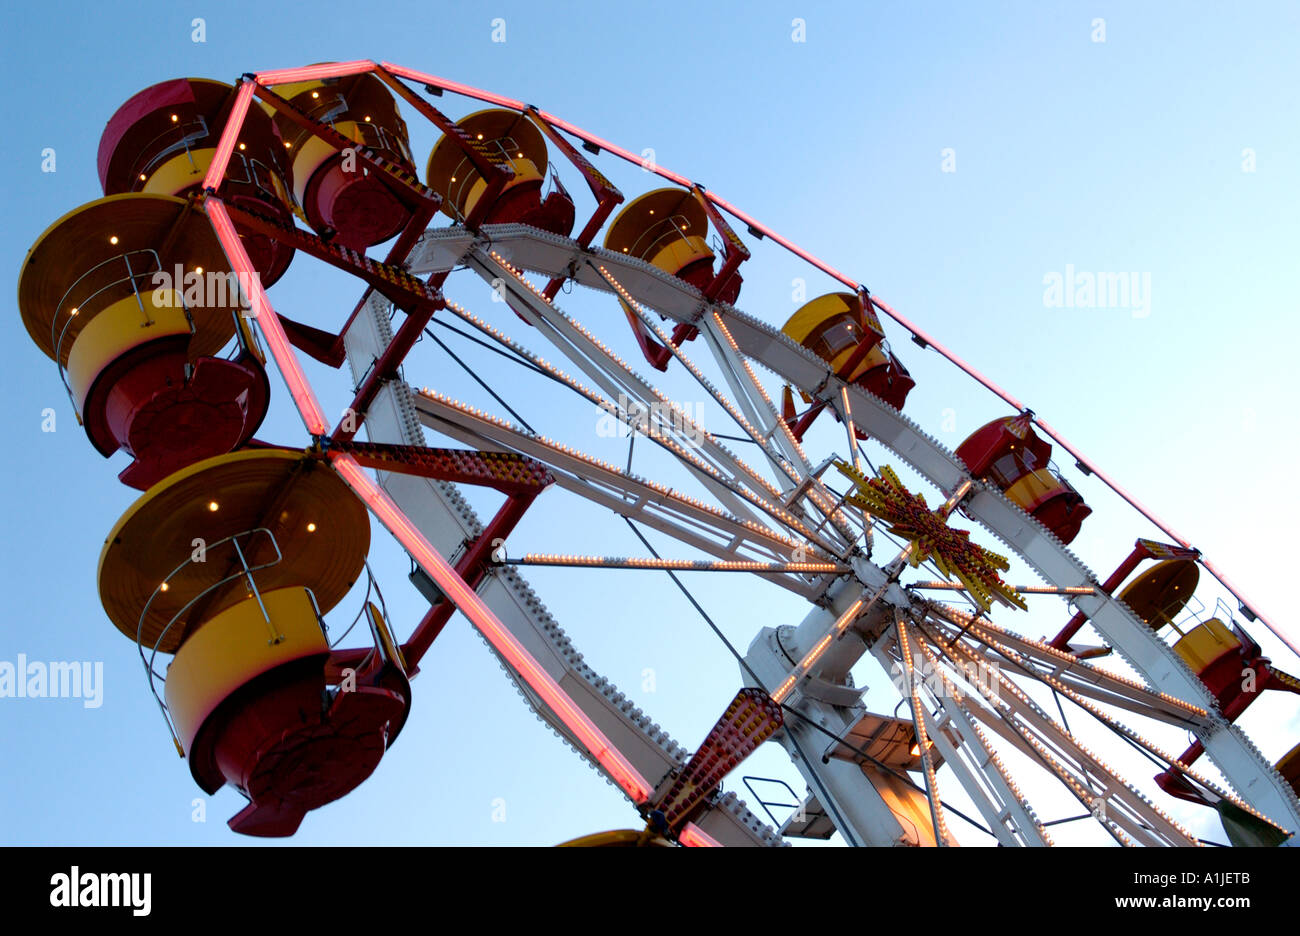 Big ferris wheel fairground ride at Cardiff Winter Wonderland event outside Cardiff City Hall South Wales UK Stock Photo